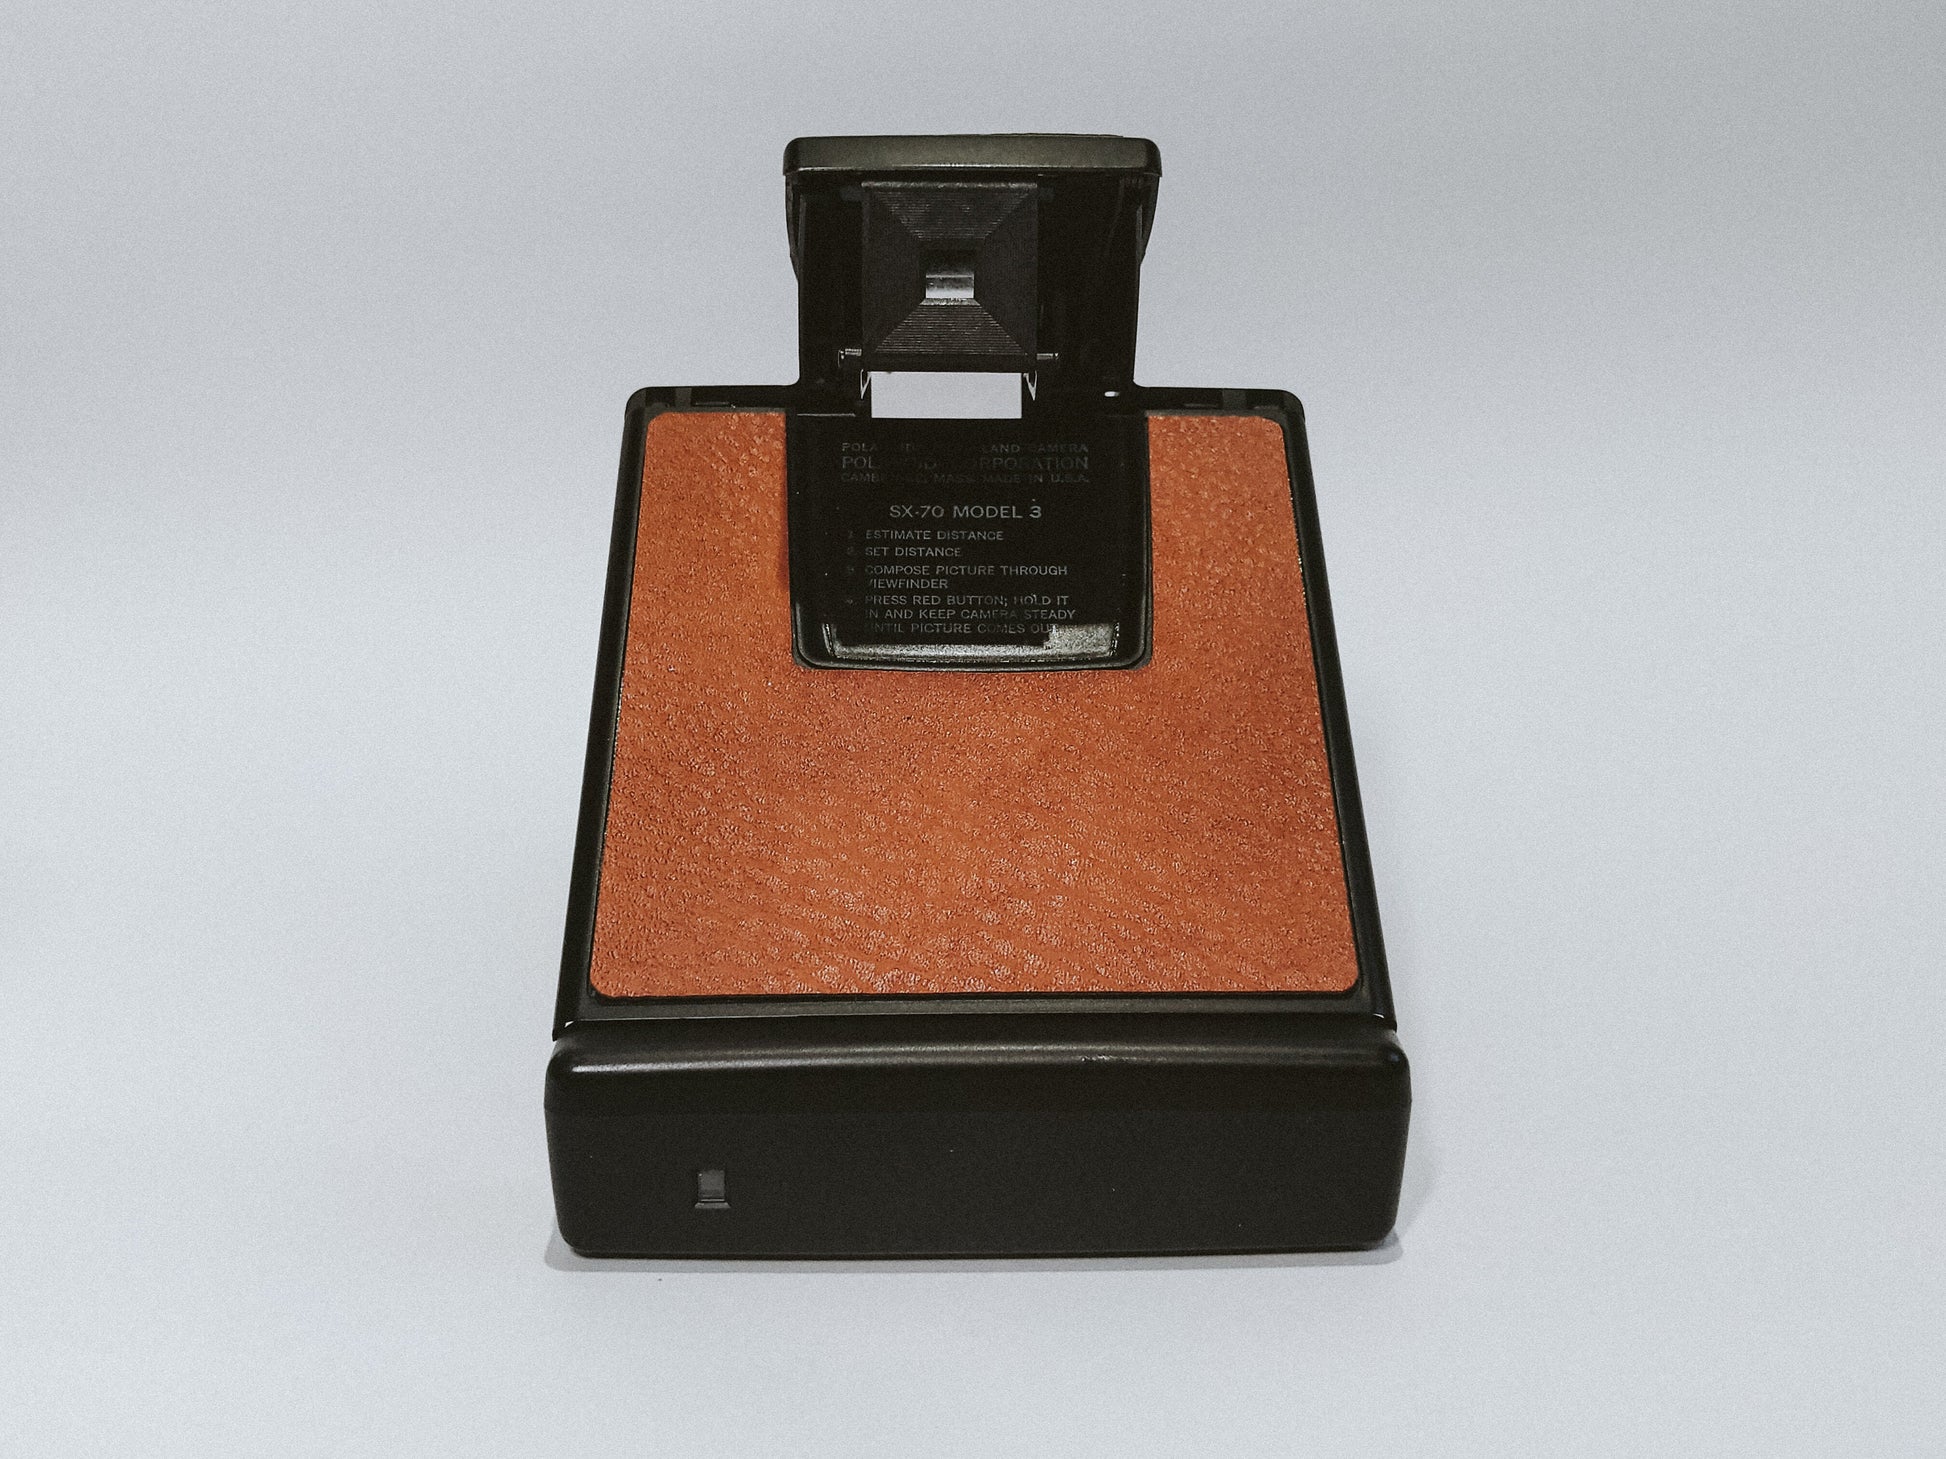 Vintage Polaroid SX-70 Instant Film Camera Model 3 fully Black body - Brown leather